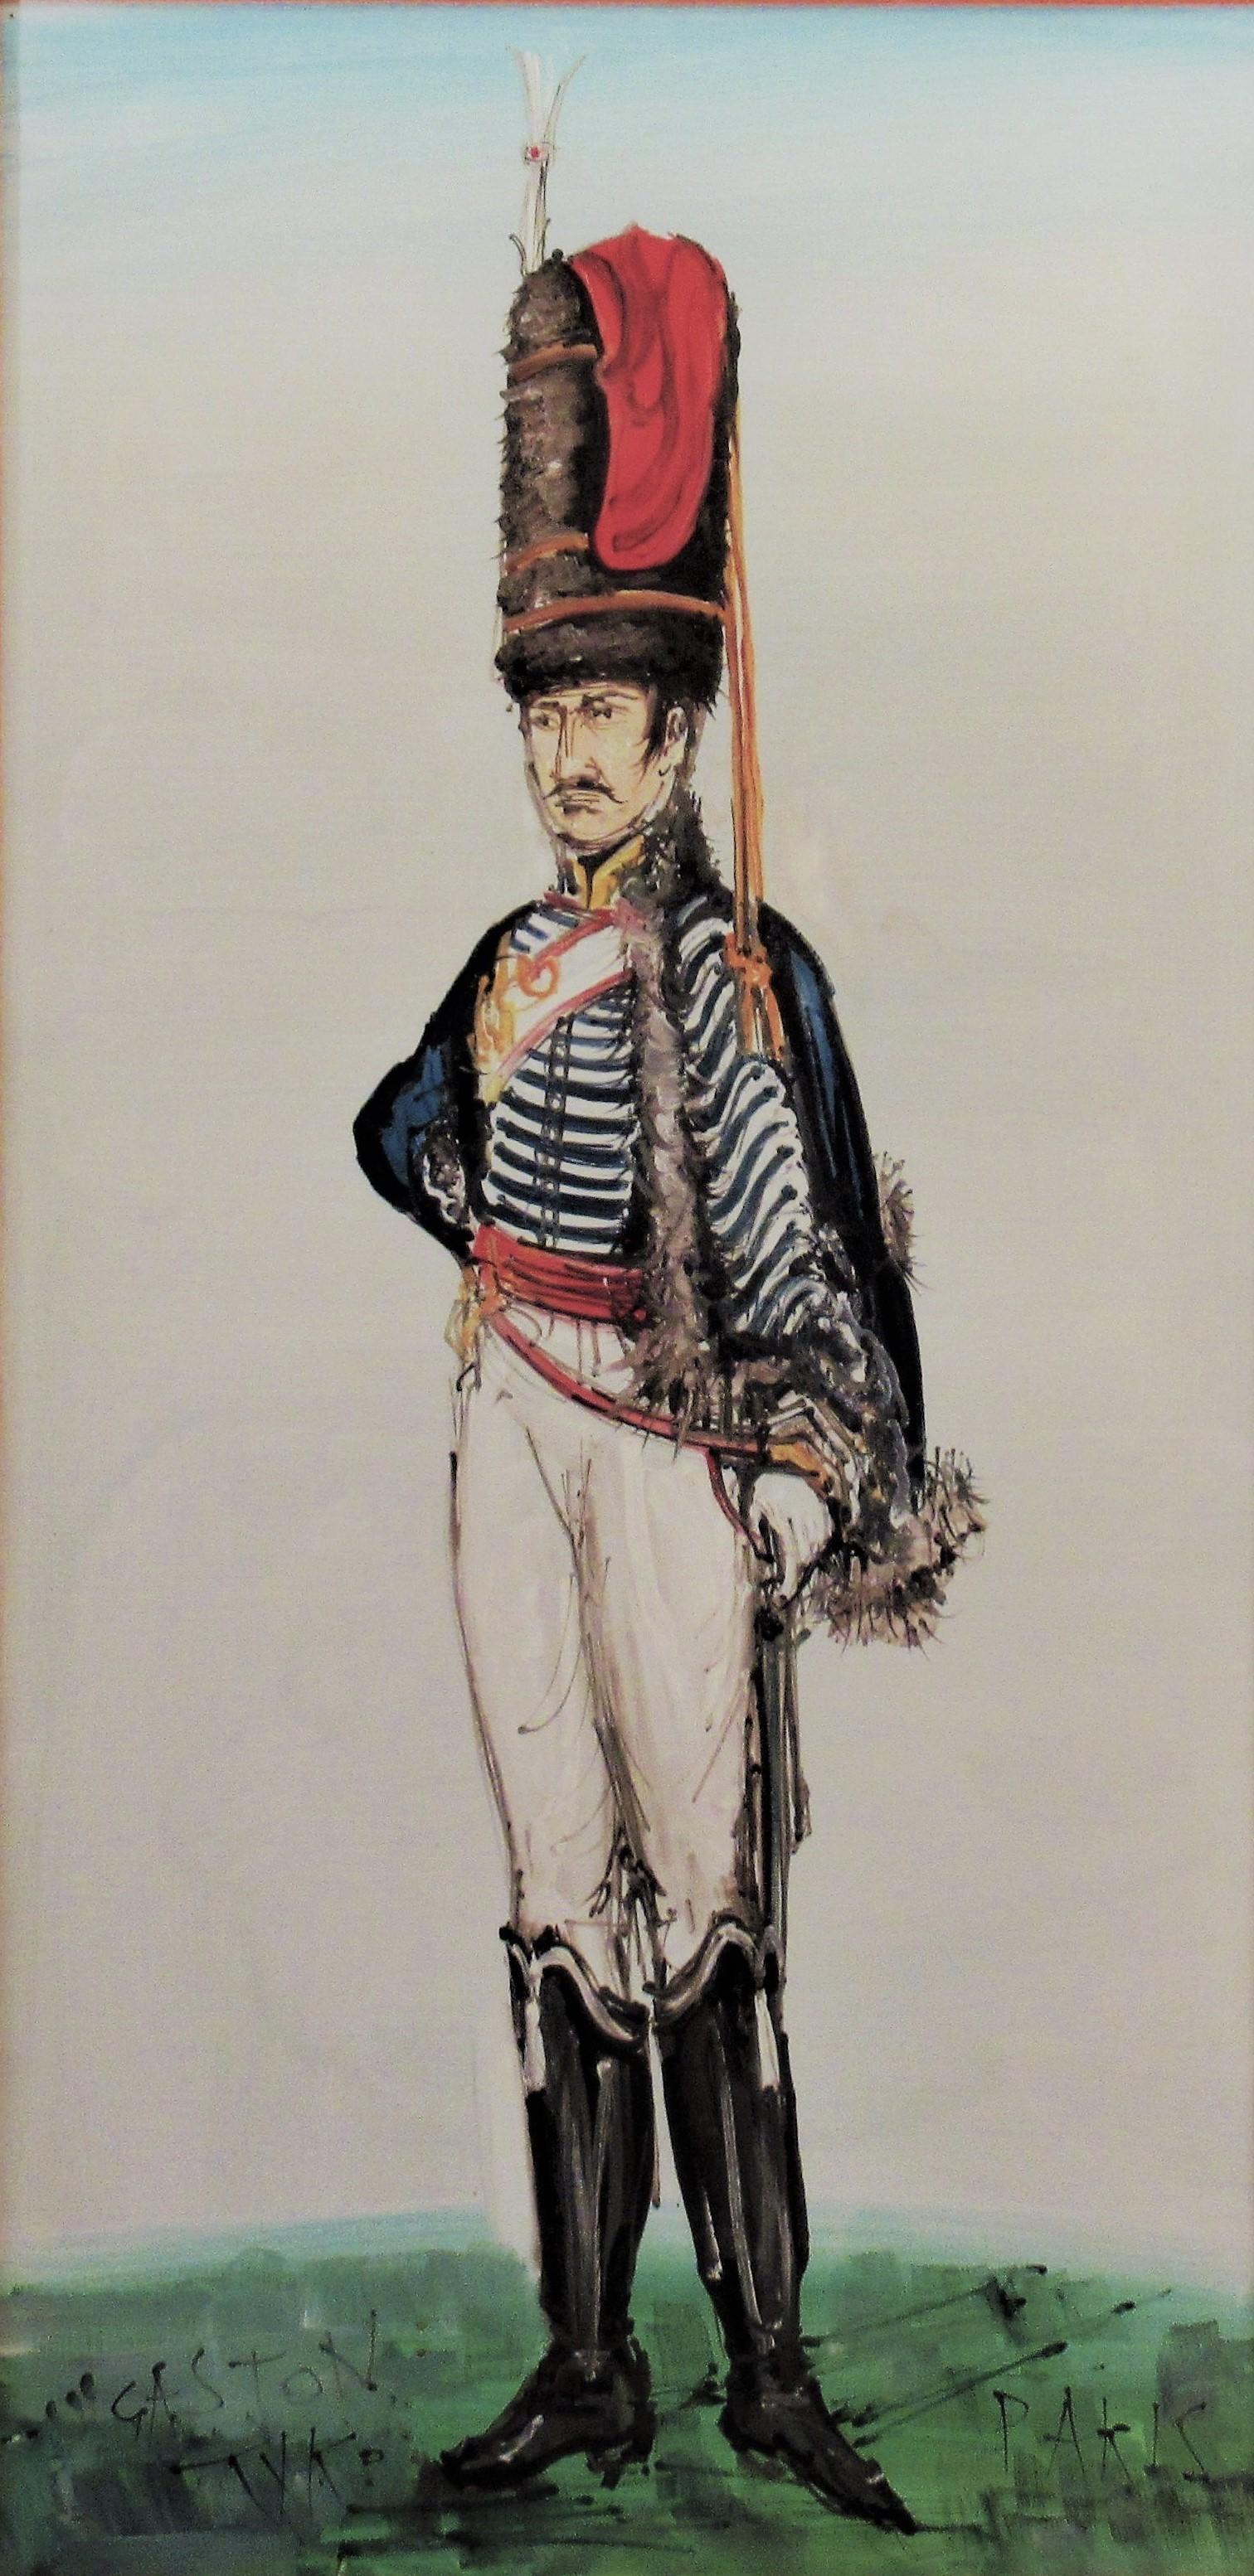 Hussard du Premier Empire, Paris - Painting by Gaston Tyco